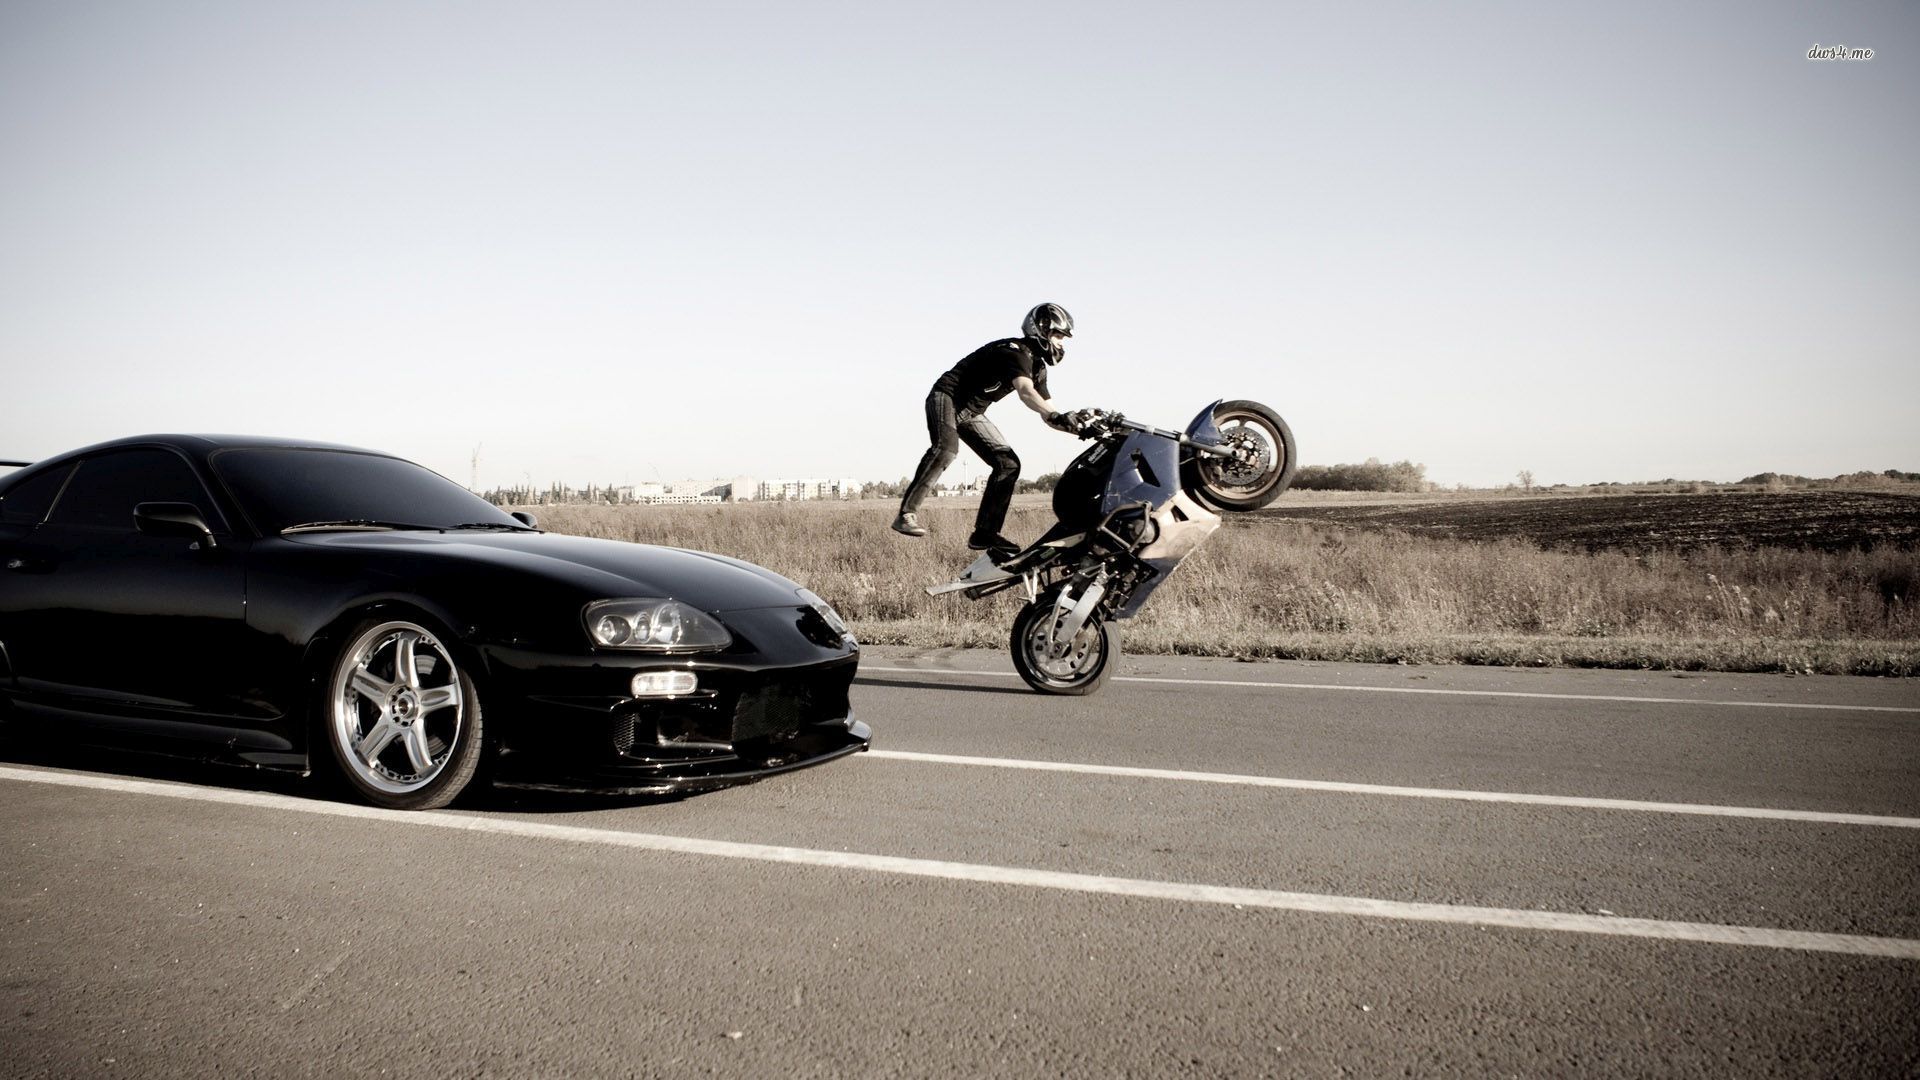 Stunt Riding Wallpaper Motorcycle